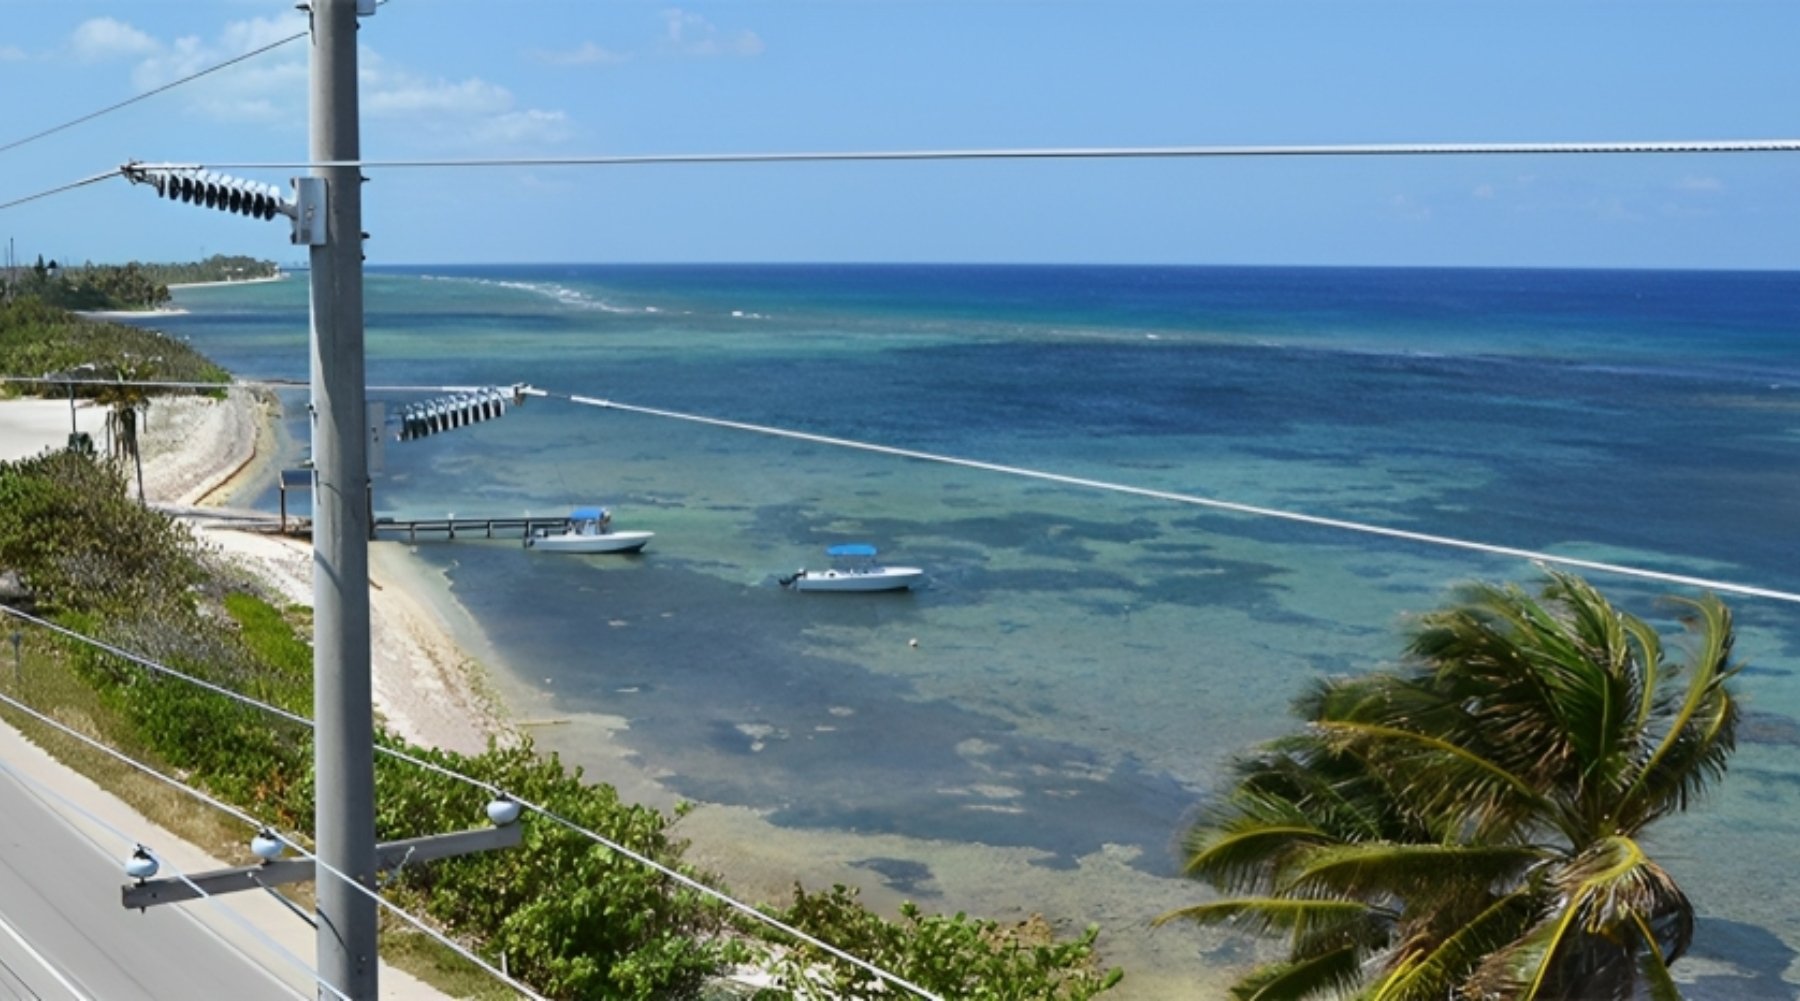 Cayman Islands Infrastructure